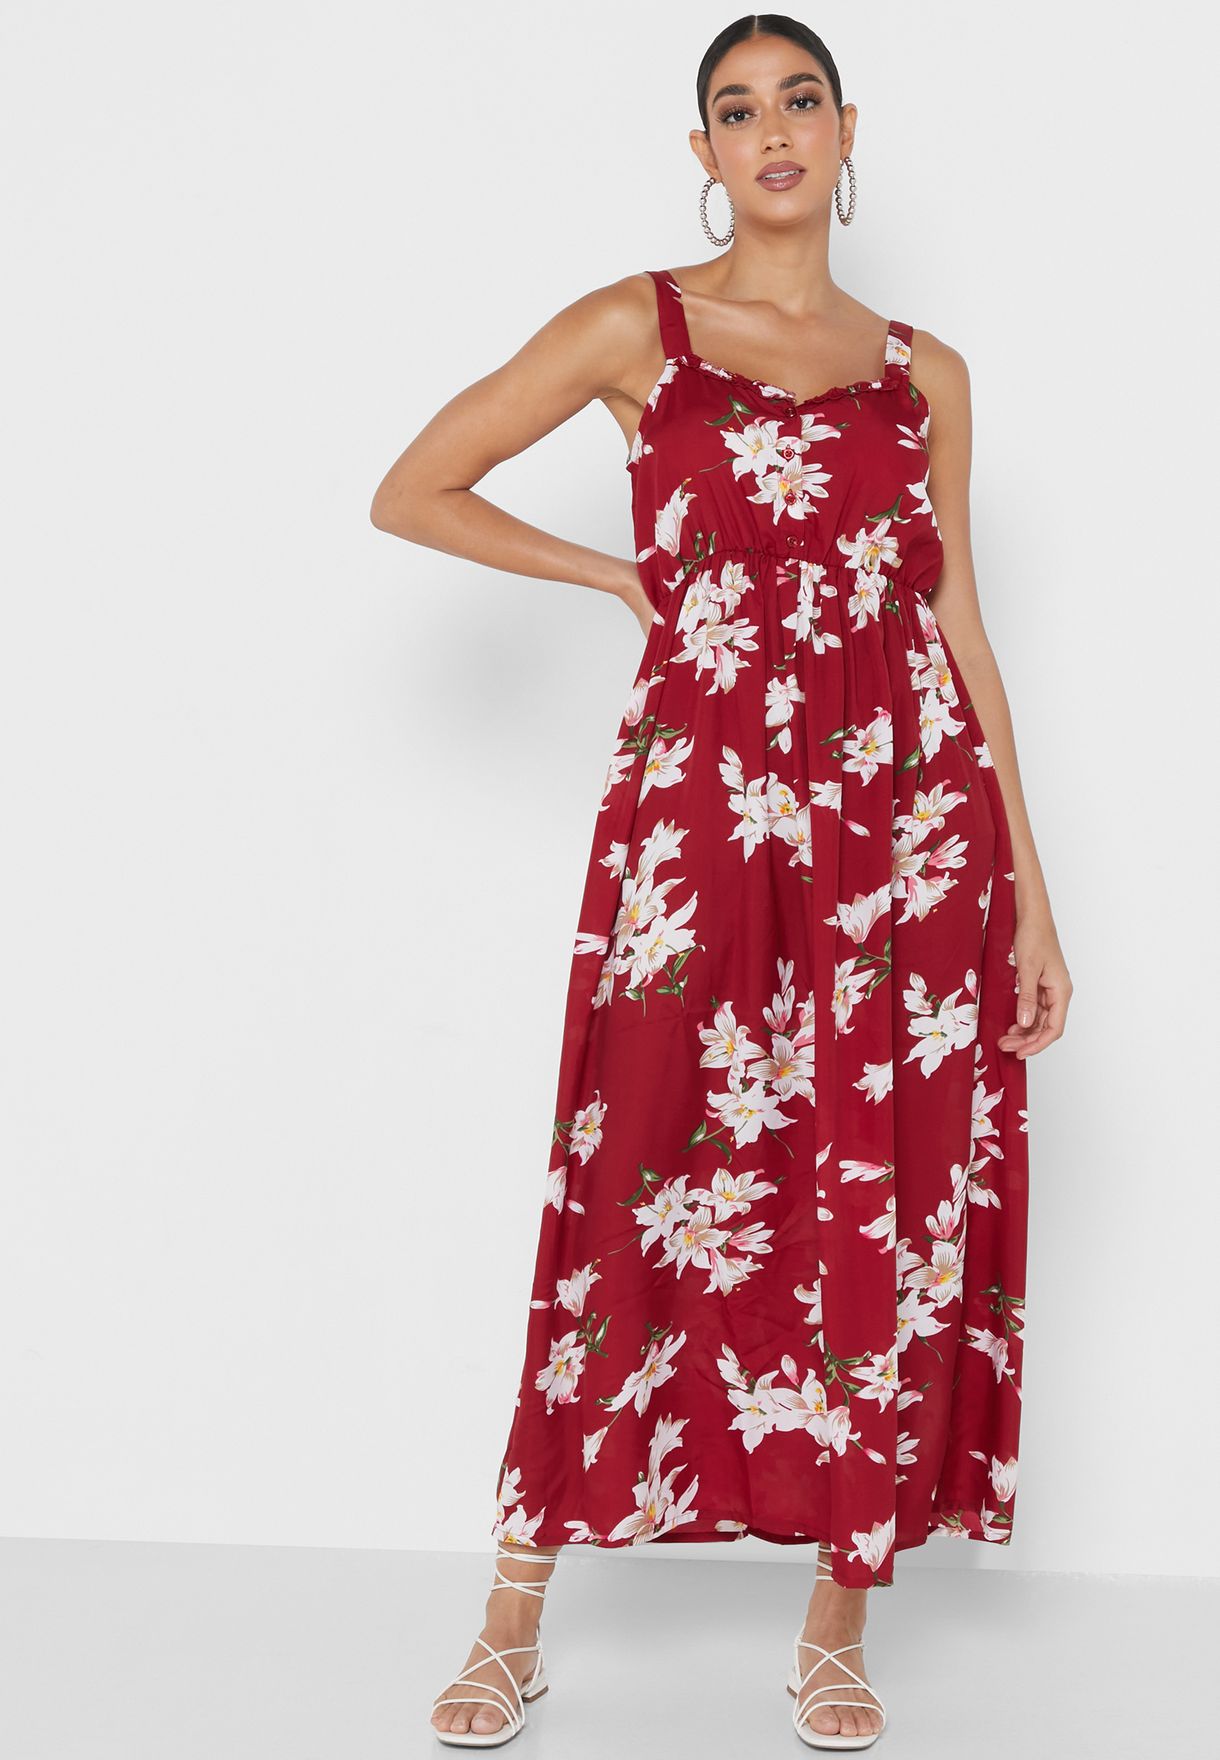 Floral Print Strappy Dress